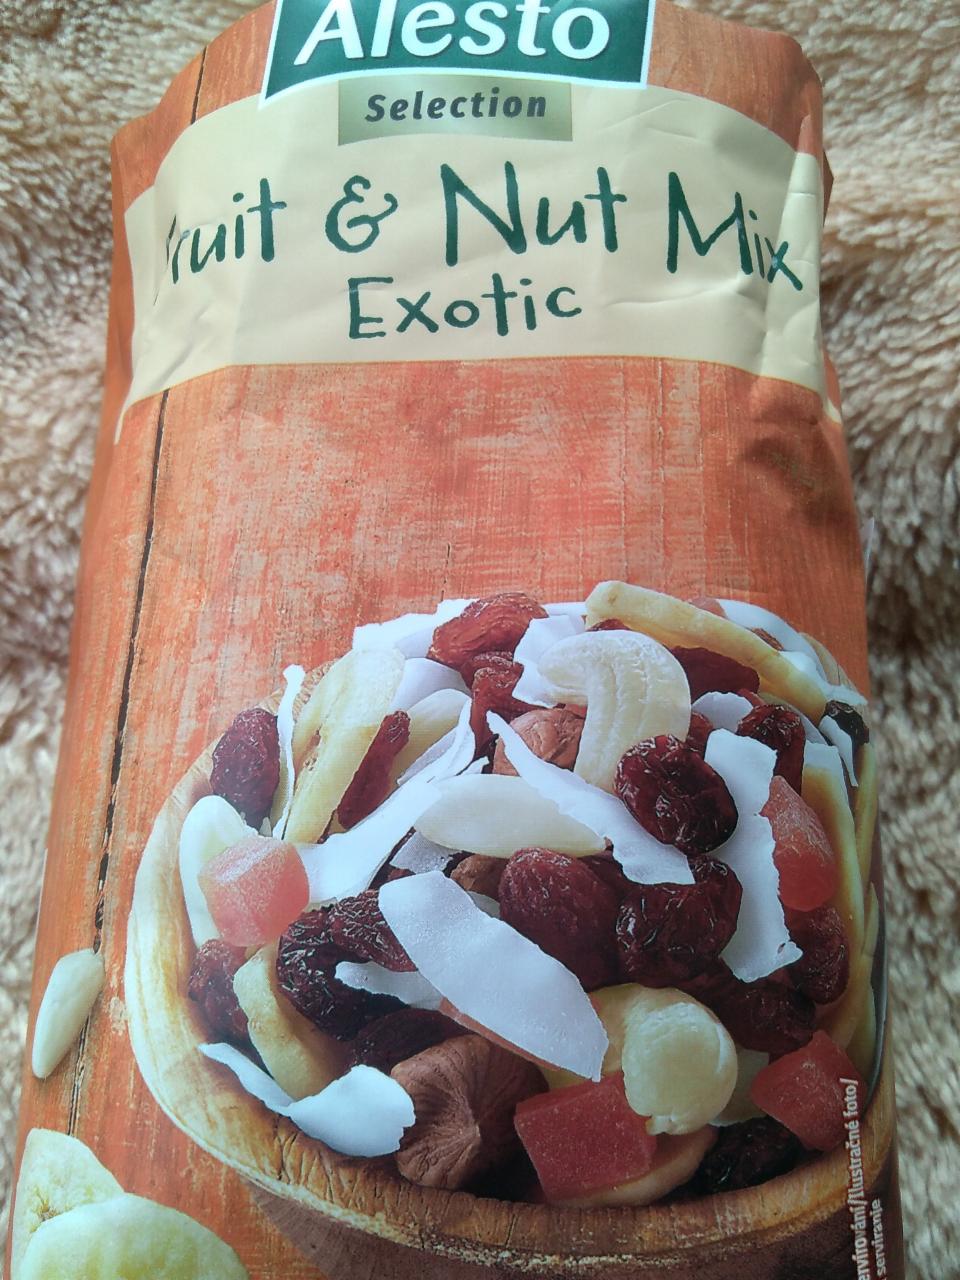 Fotografie - Fruit & Nut Mix Exotic Alesto